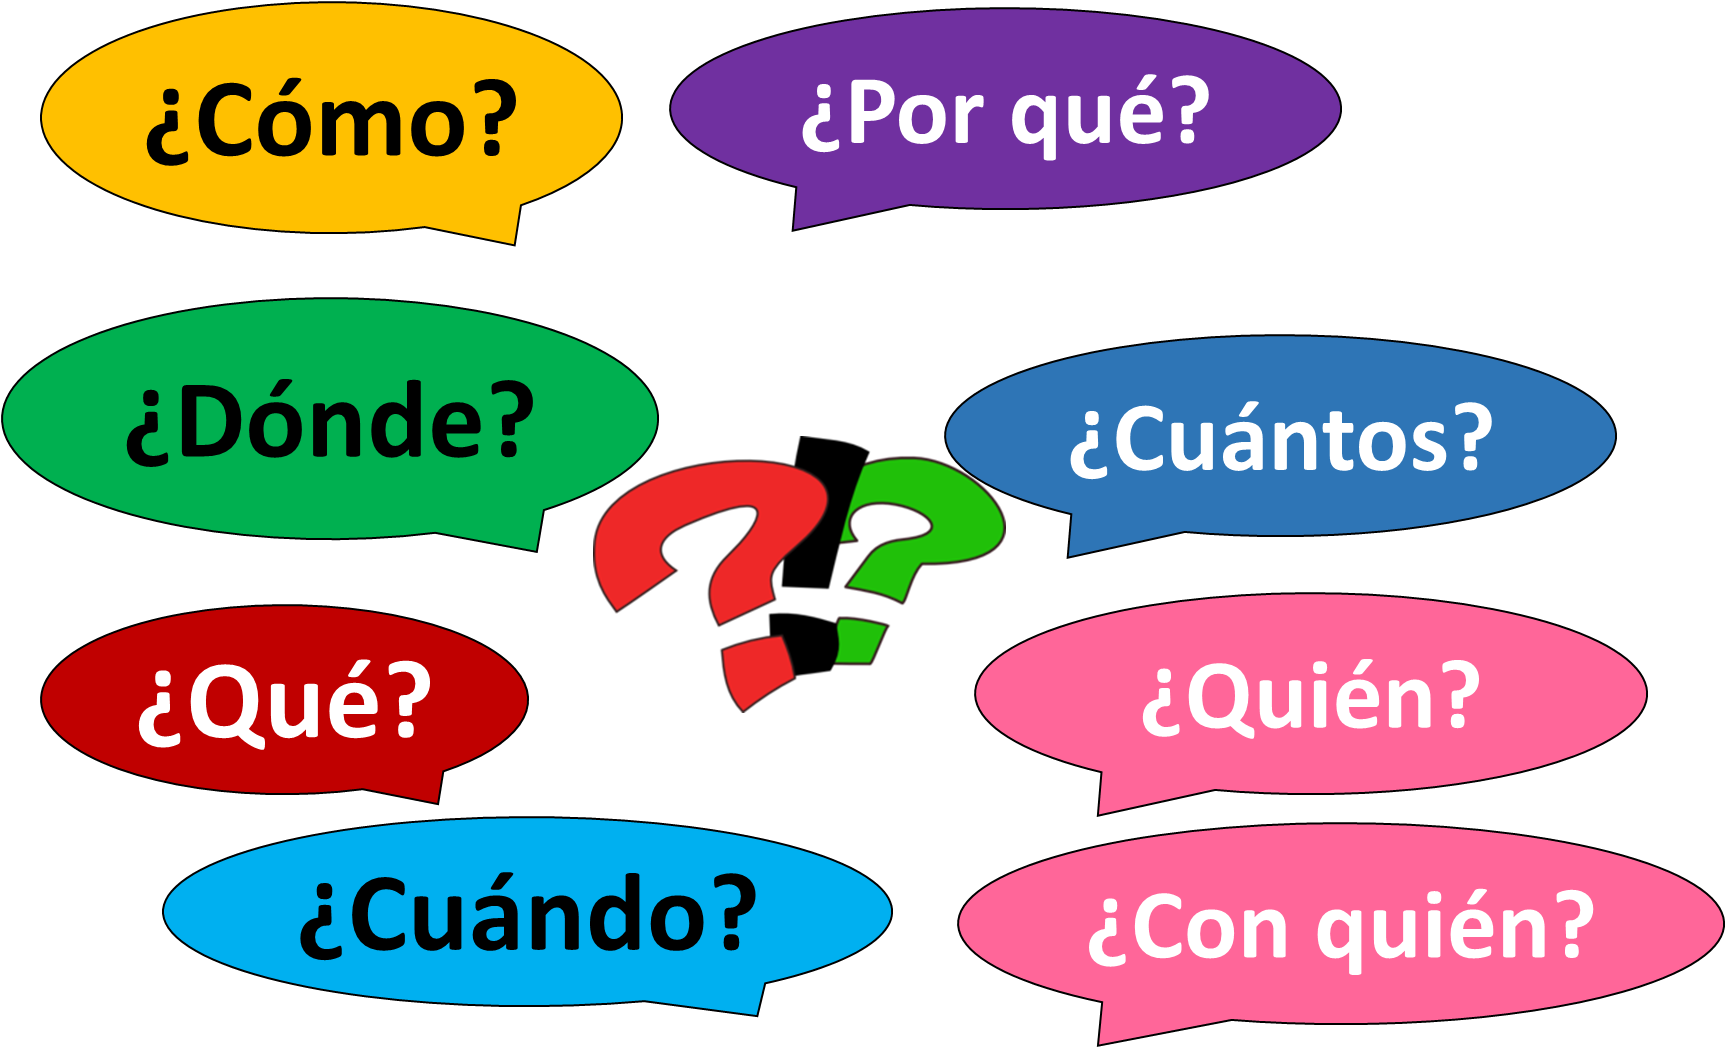 spanish phrases clipart